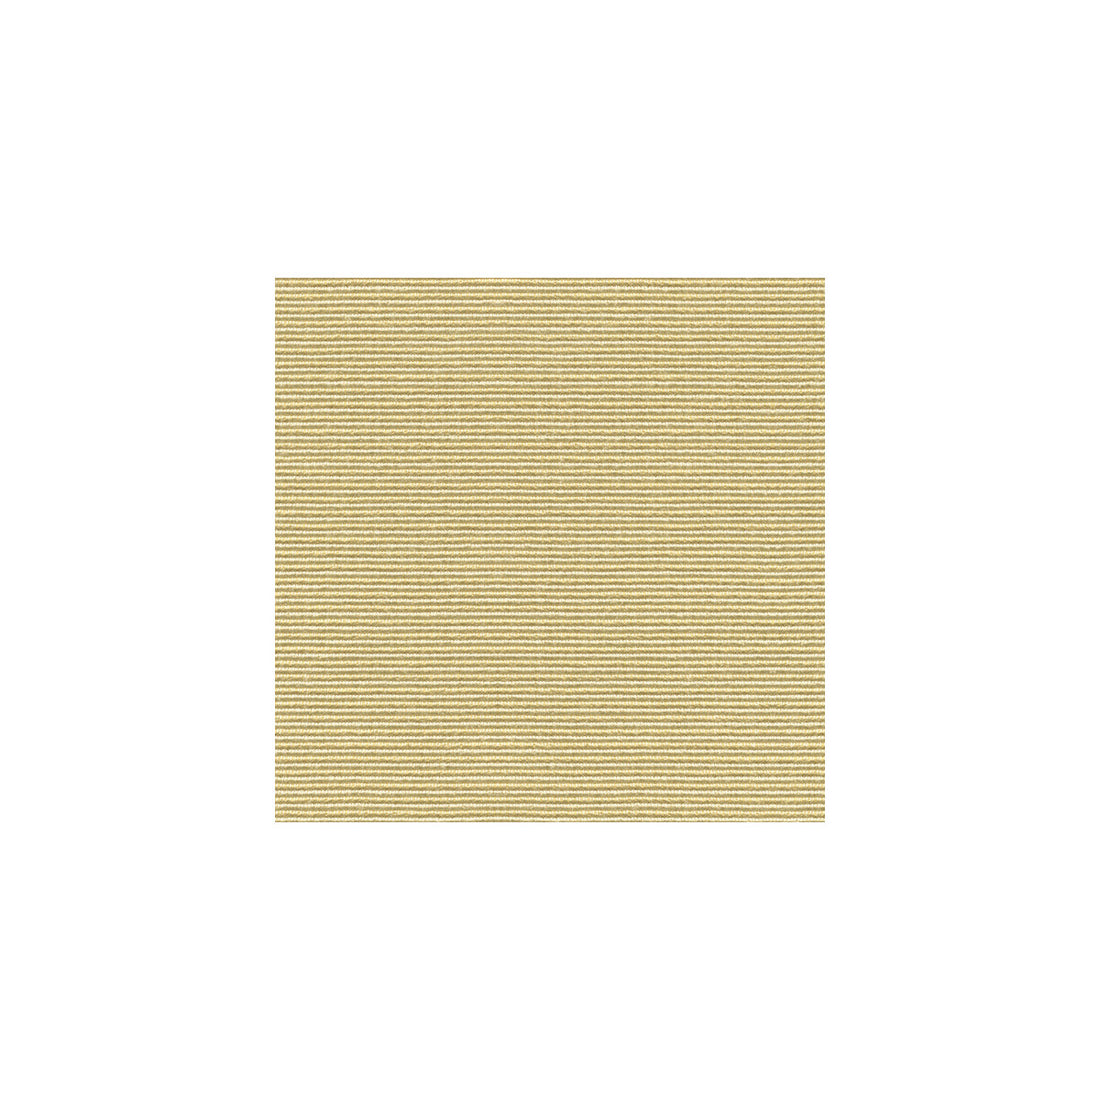 Kravet Smart fabric in 33021-116 color - pattern 33021.116.0 - by Kravet Smart